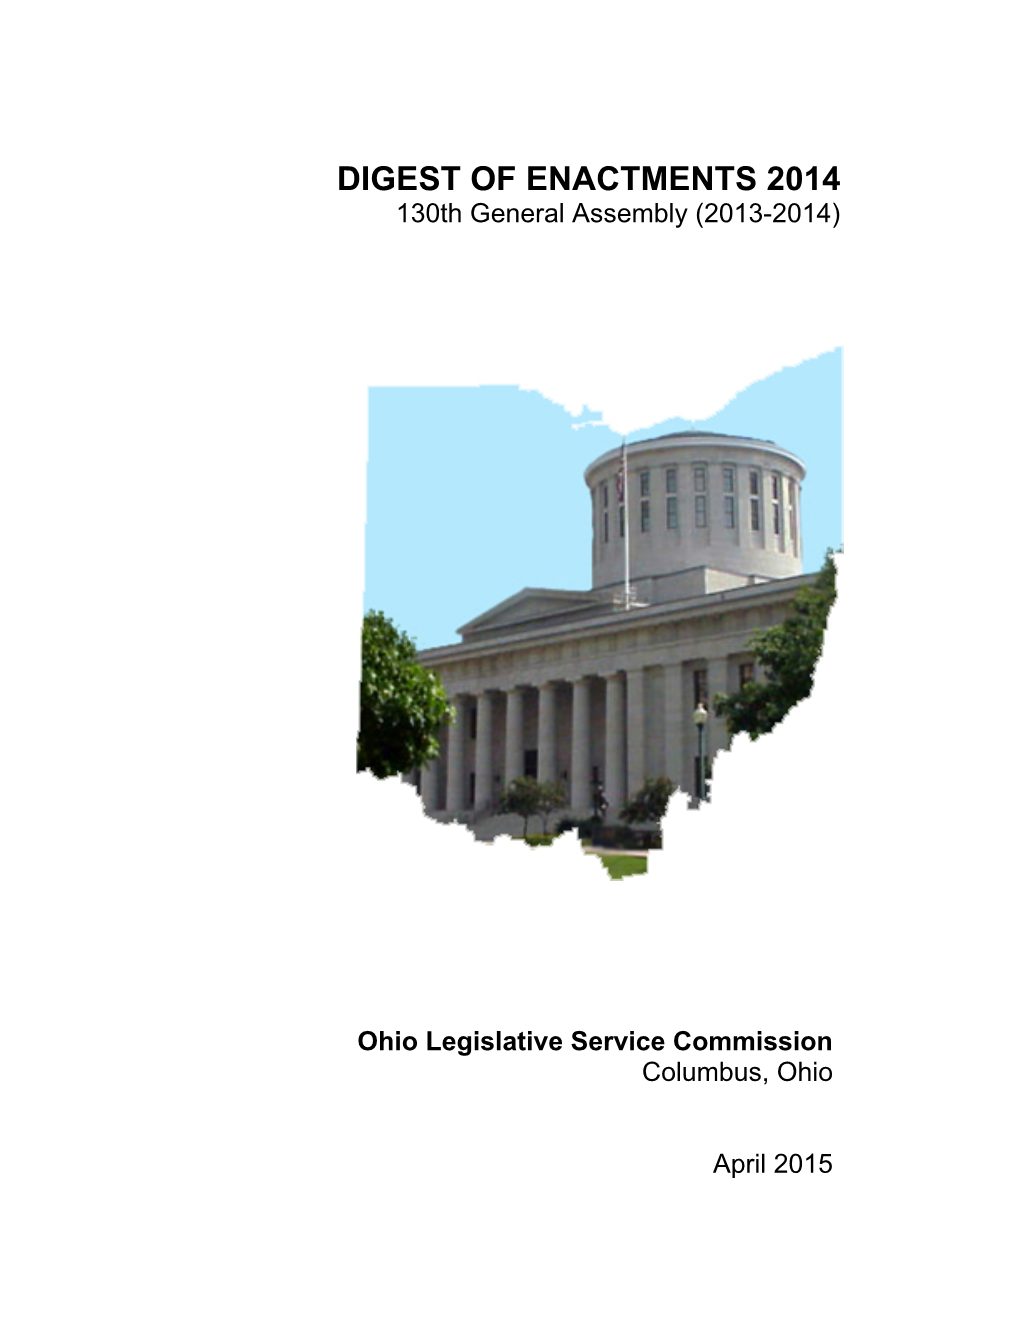 2014 Digest of Enactments